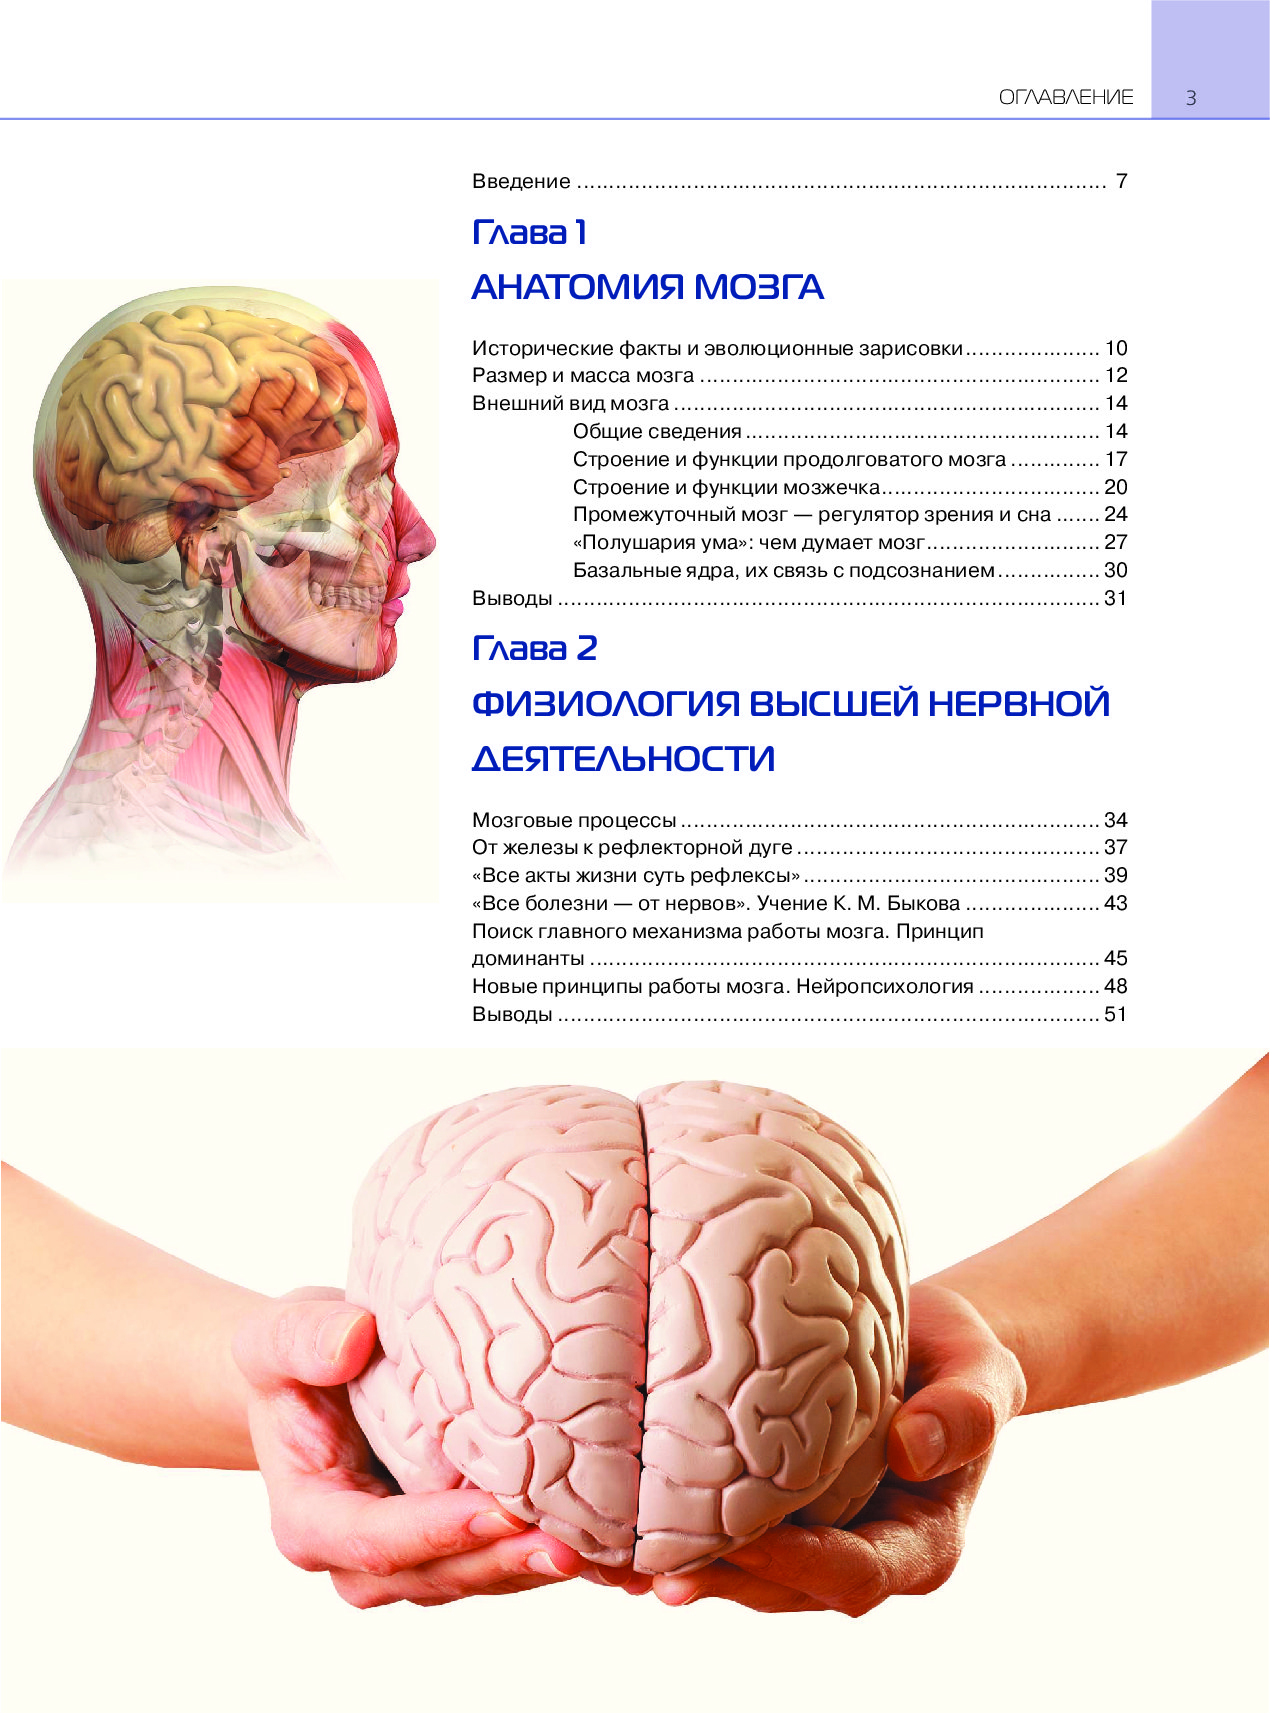 Book brain. Книга мозг. Мозг энциклопедия. Мозг с книжкой. Книга про мозг человека.